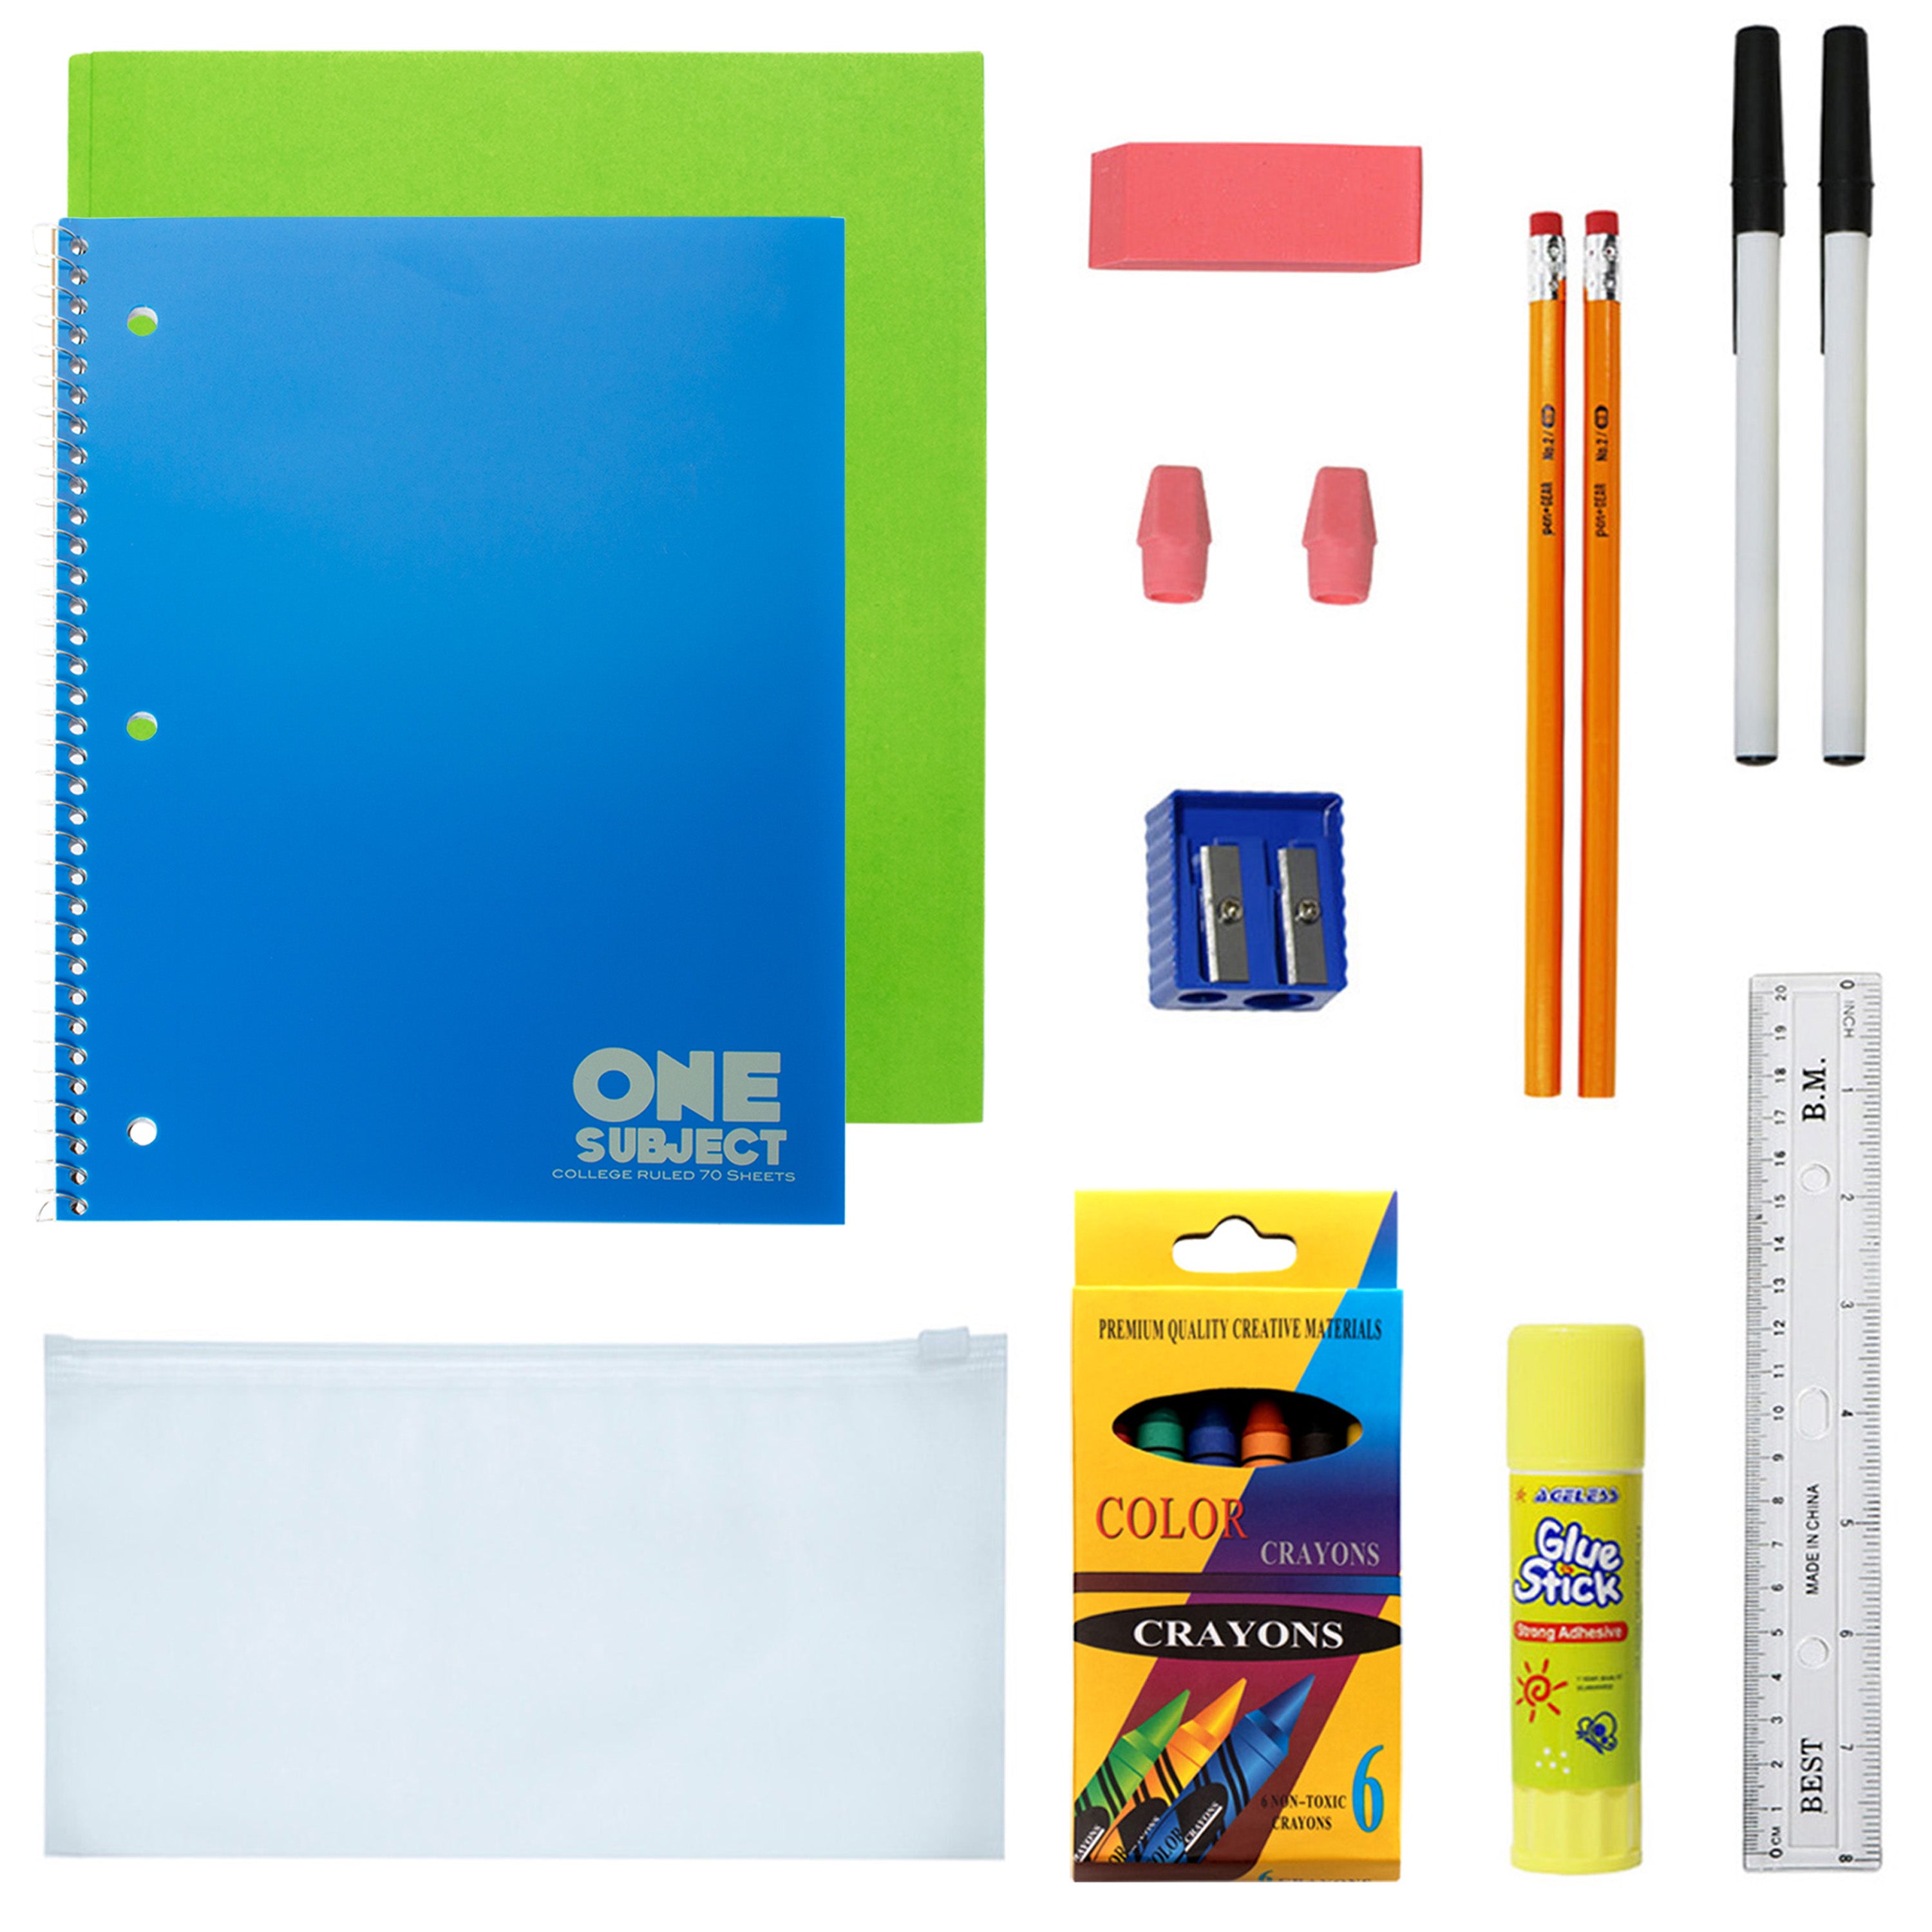 18 Piece Wholesale Premium School Supply Kits - Bulk Case of 24 Kits